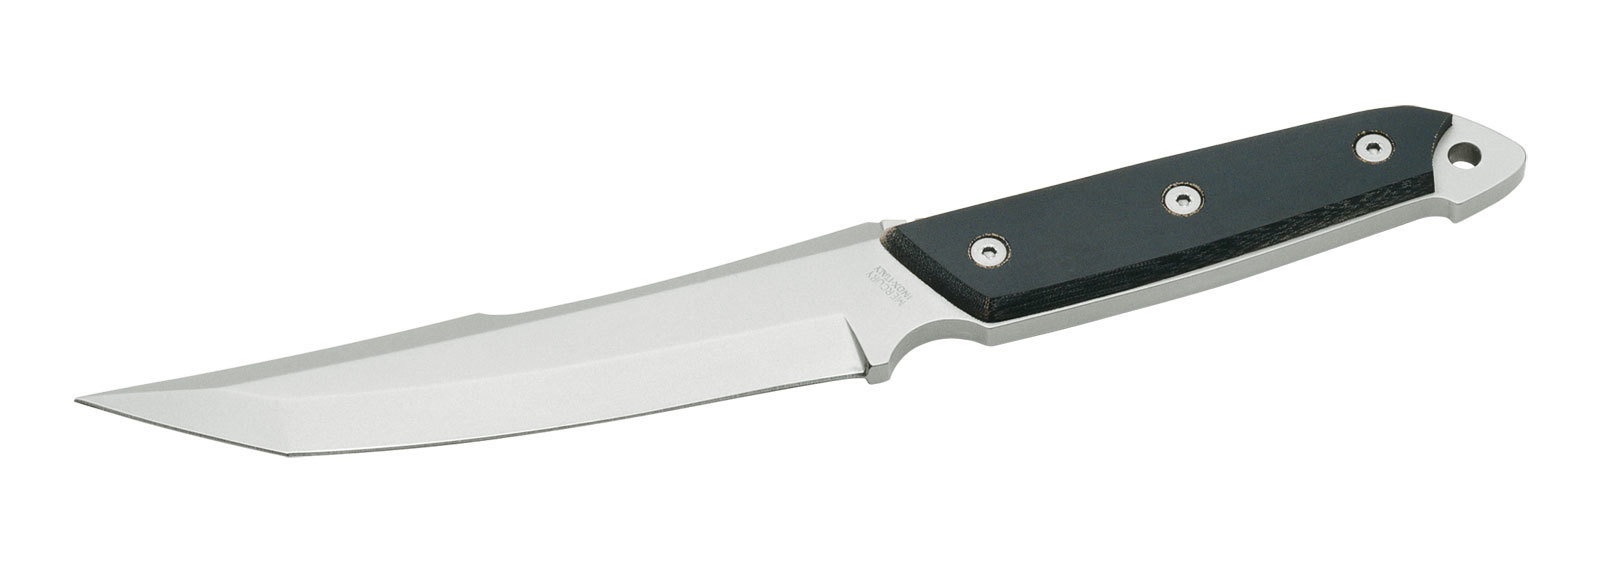 Нож с фиксированным клинком Remington Дракон (Mercury Dragon) - фото 4